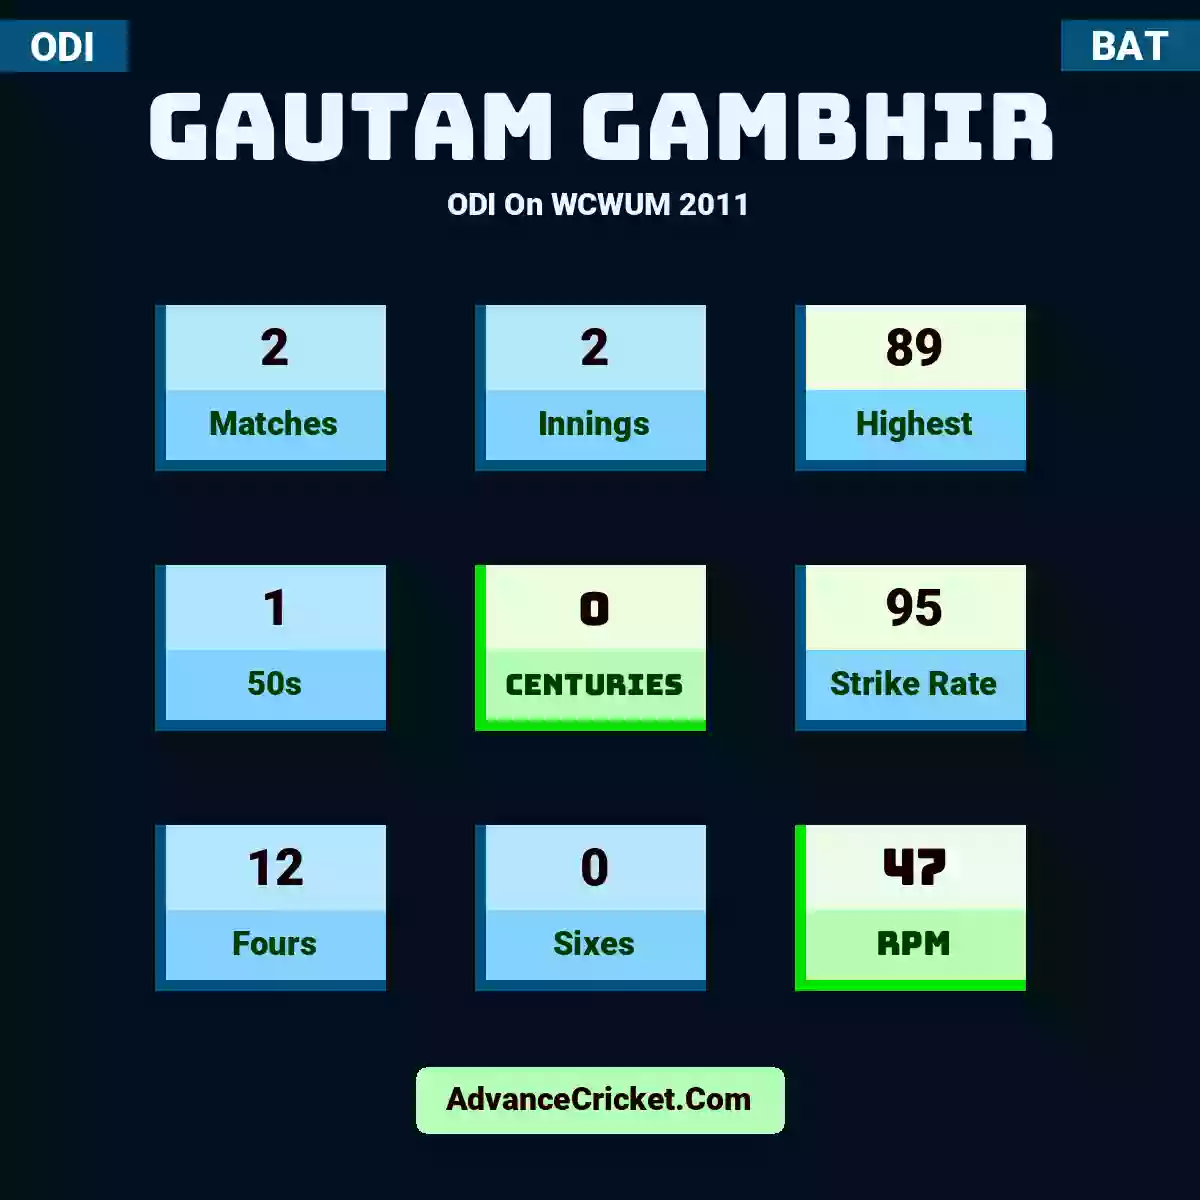 Gautam Gambhir ODI  On WCWUM 2011, Gautam Gambhir played 2 matches, scored 89 runs as highest, 1 half-centuries, and 0 centuries, with a strike rate of 95. G.Gambhir hit 12 fours and 0 sixes, with an RPM of 47.